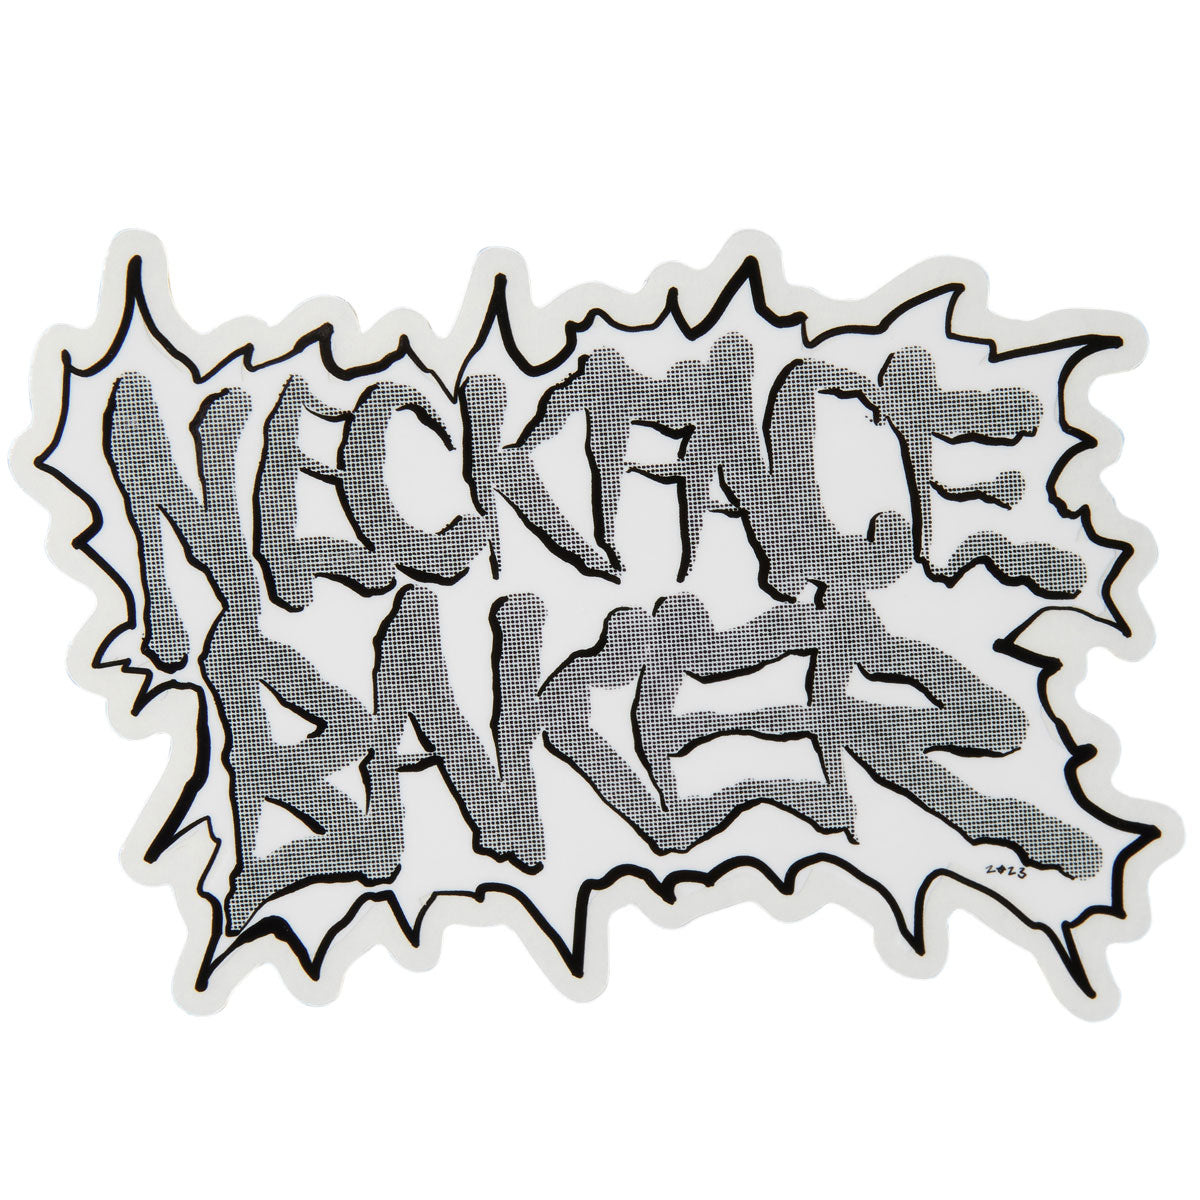 baker baker x neckface toxic rats sticker